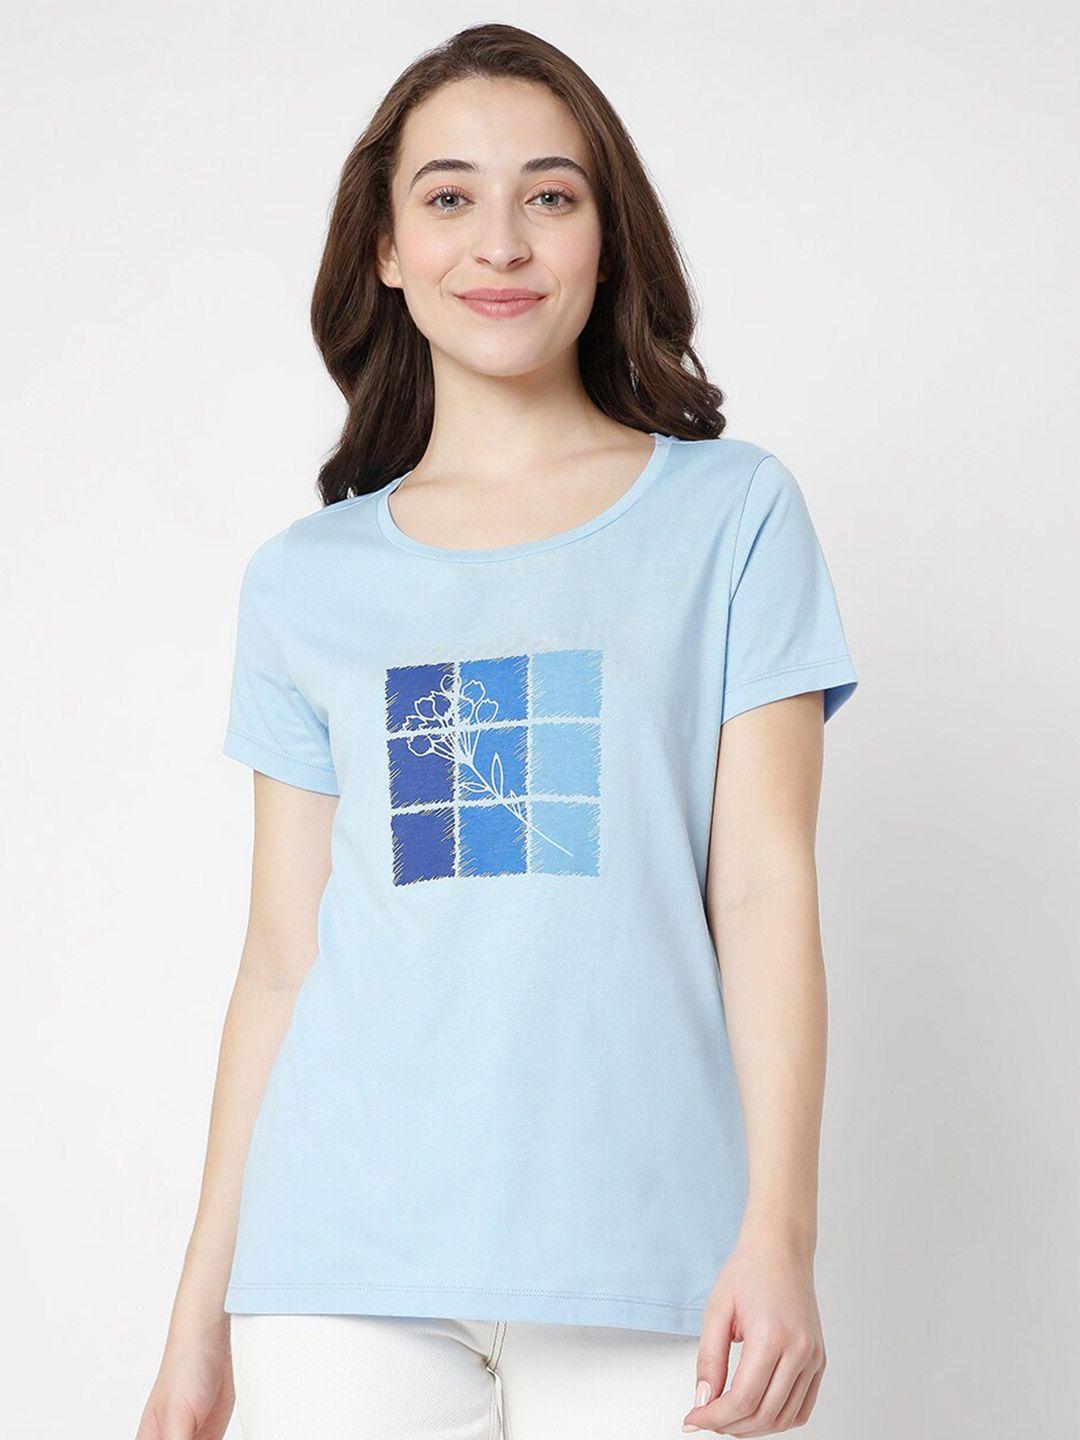 vero moda women blue typography printed v-neck extended sleeves t-shirt